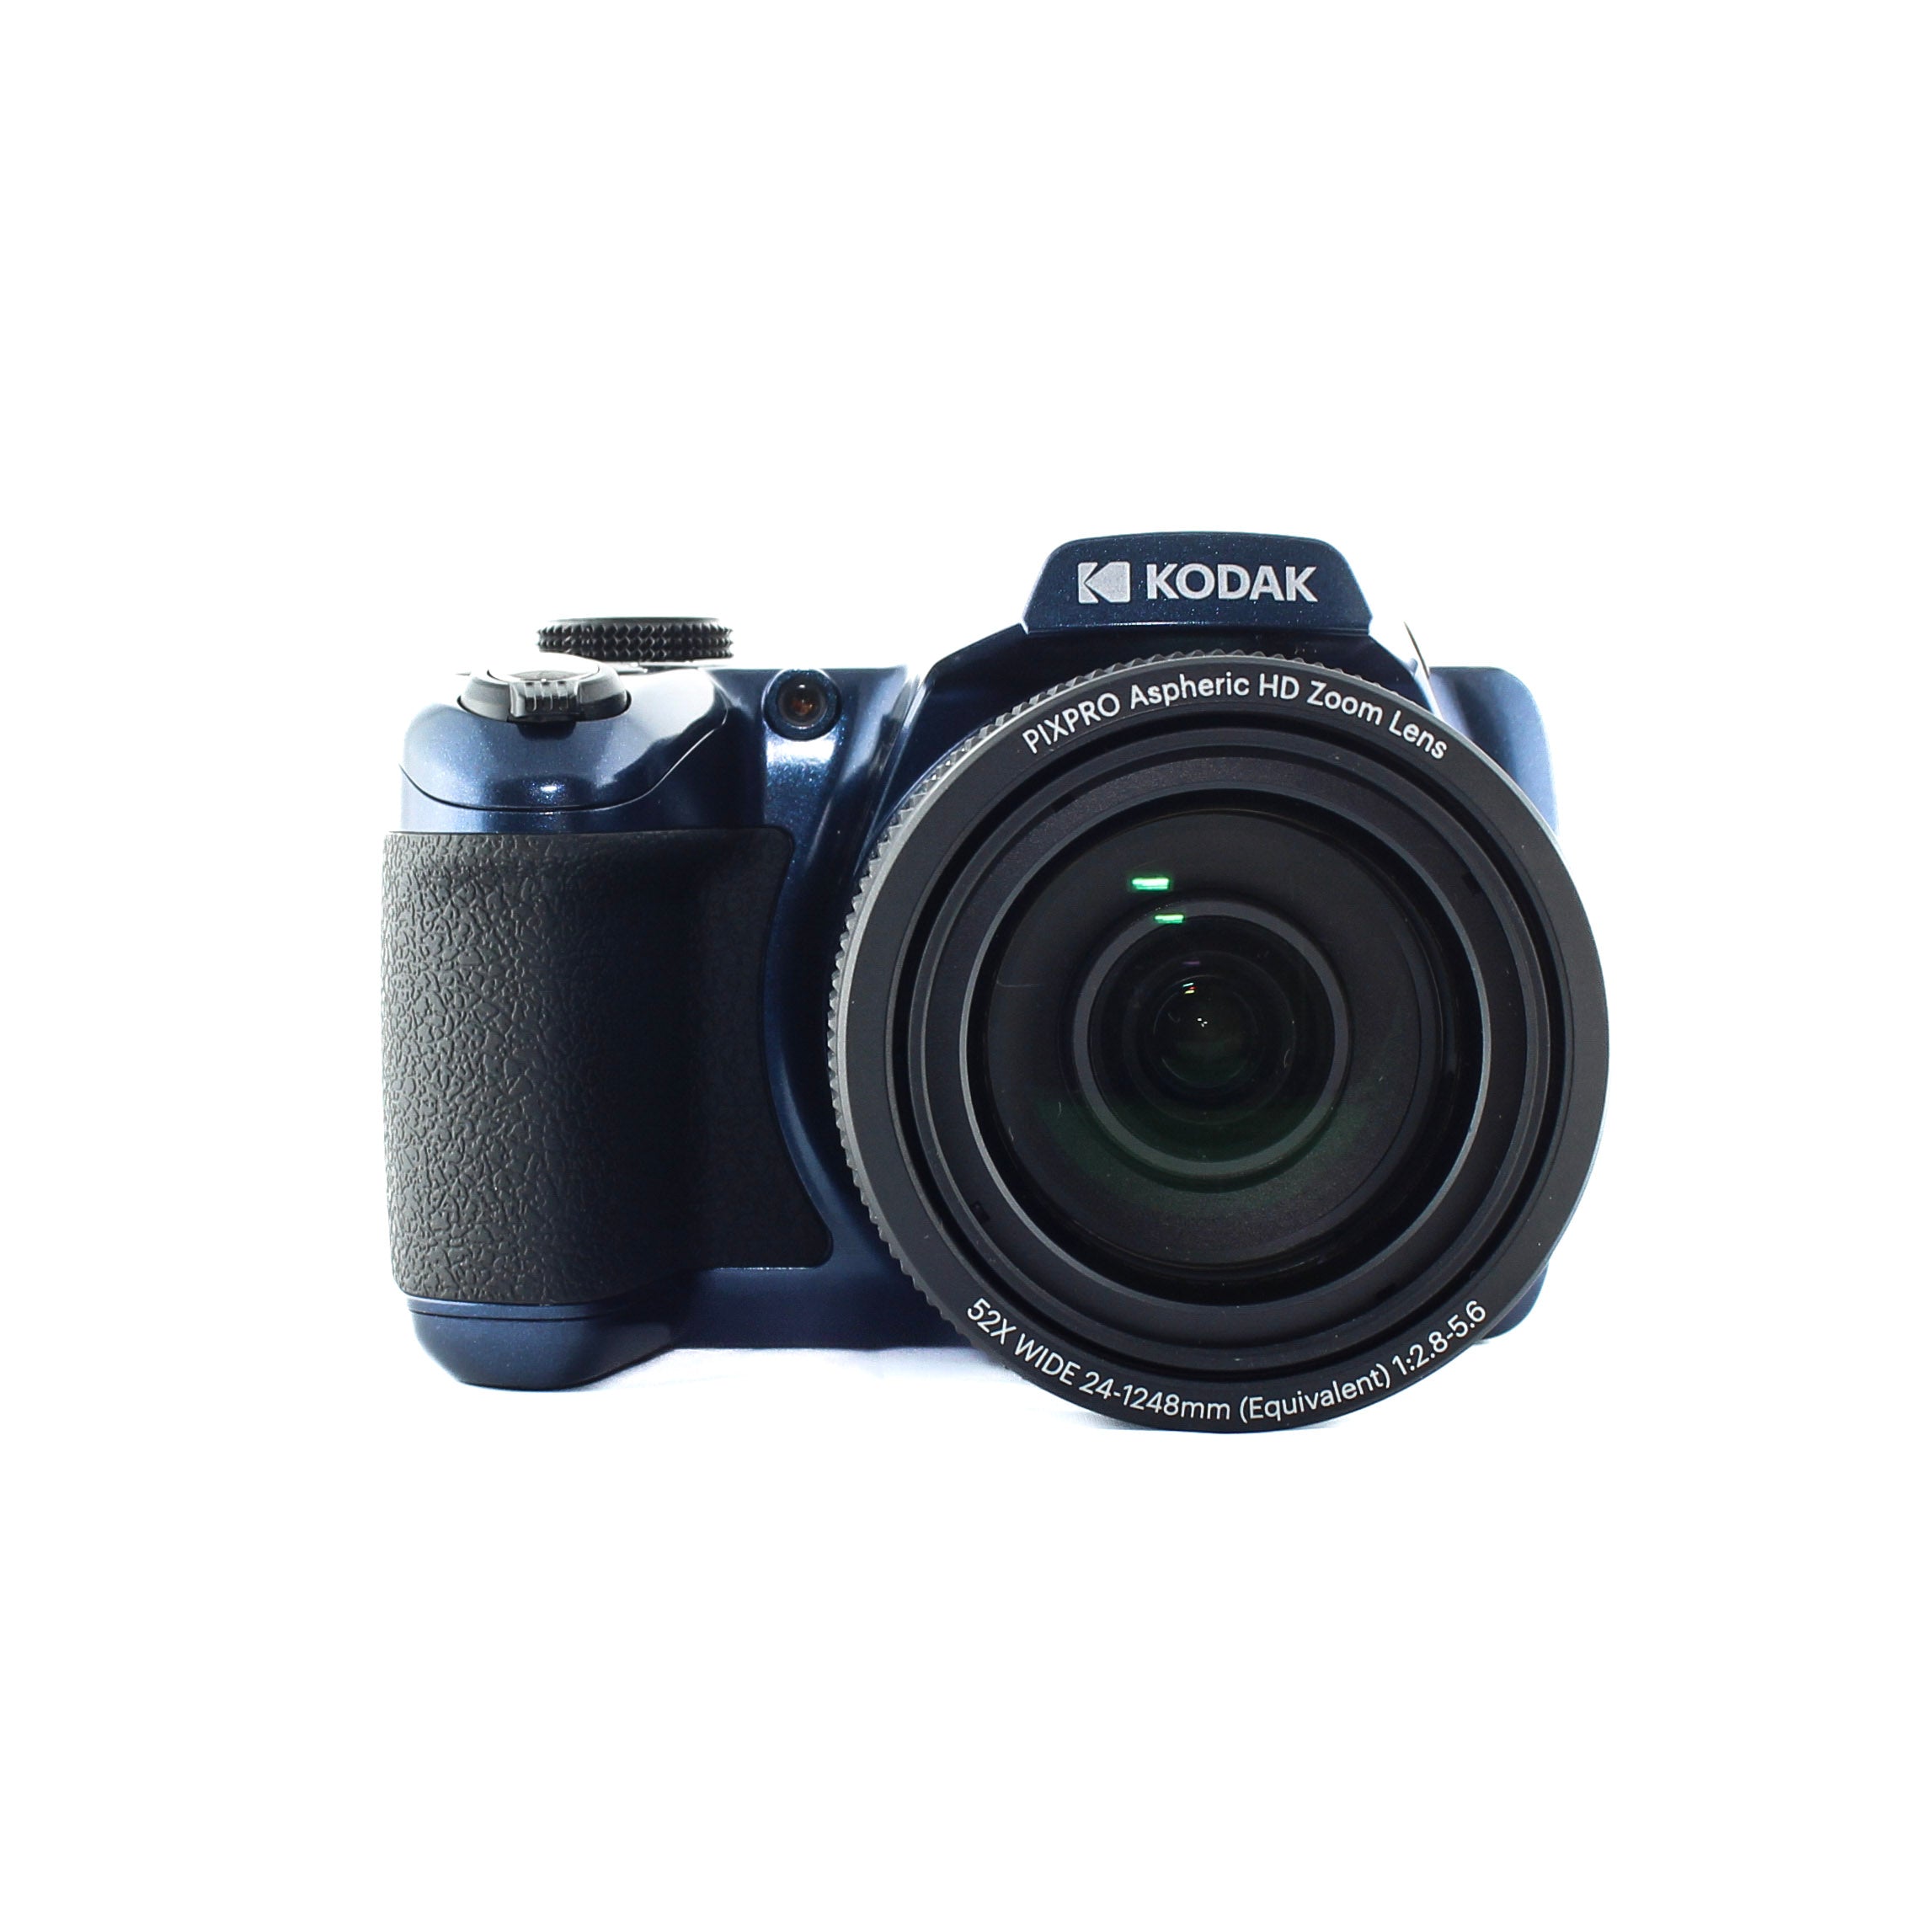 Kodak Pixpro FZ45 Camera (White) + 1 Yr Warranty + Flash - 64GB Kit